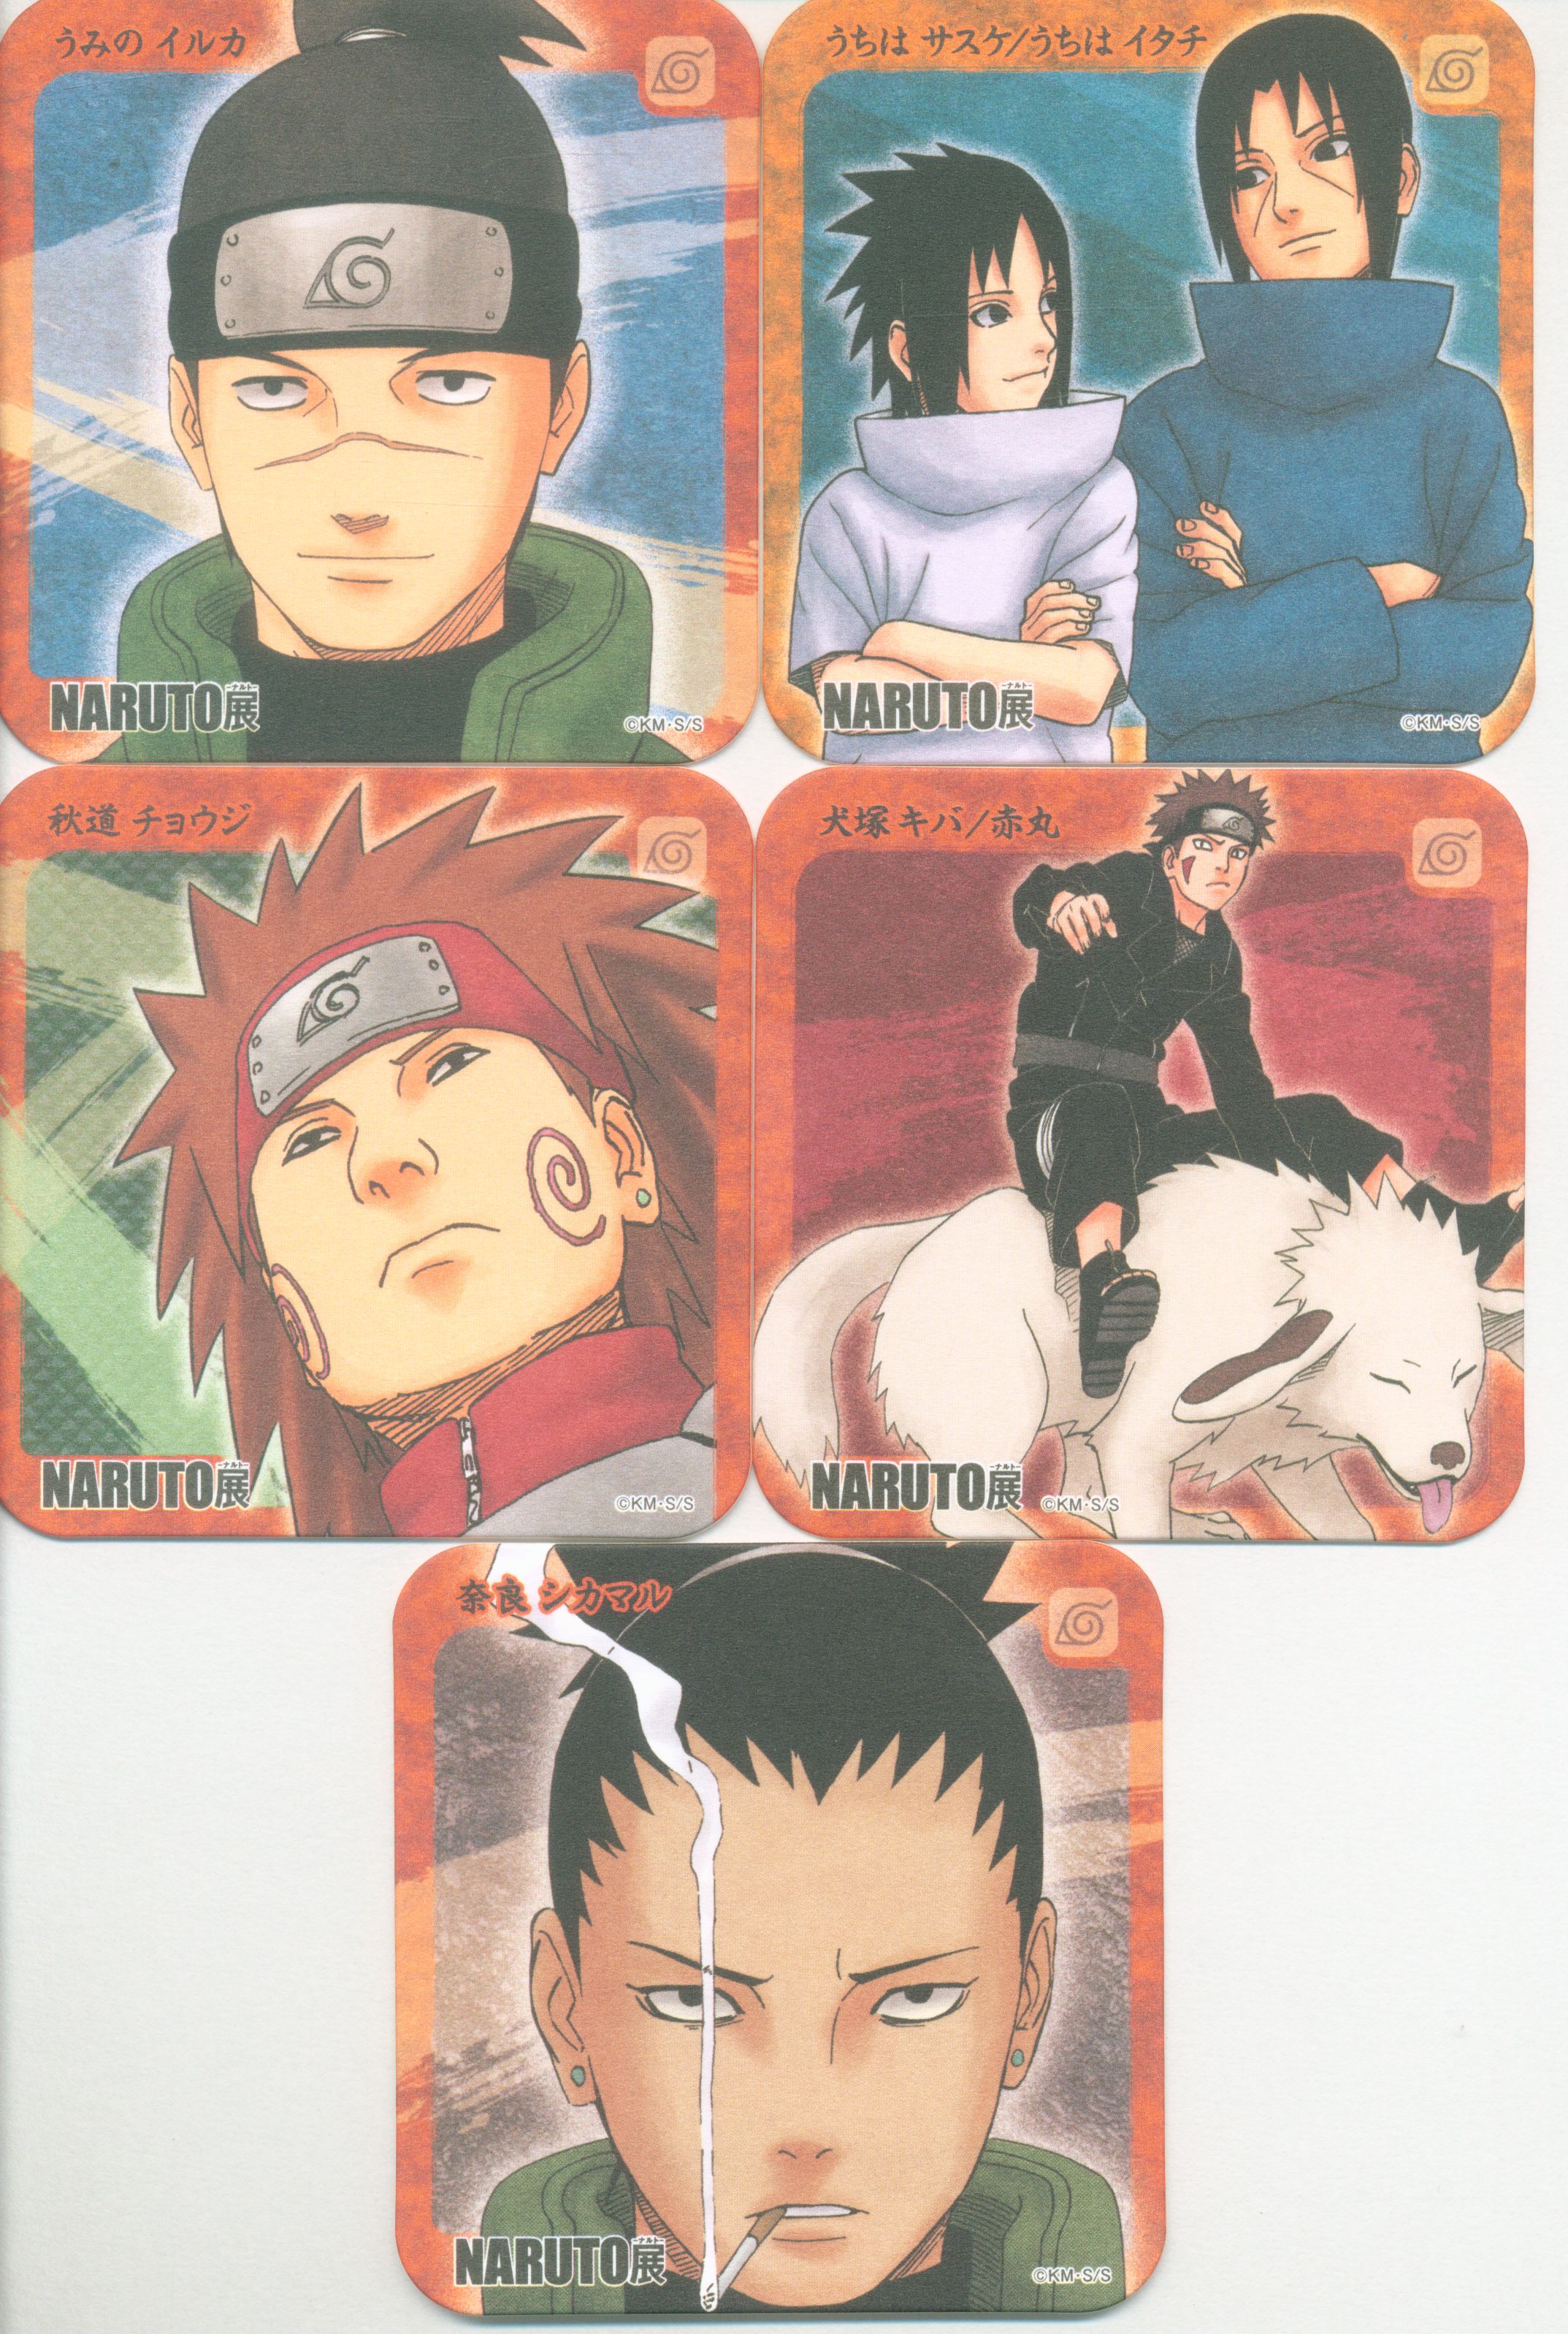 Naruto Naruto Exhibition Art Coster Coaster Five Set C Mandarake Online Shop